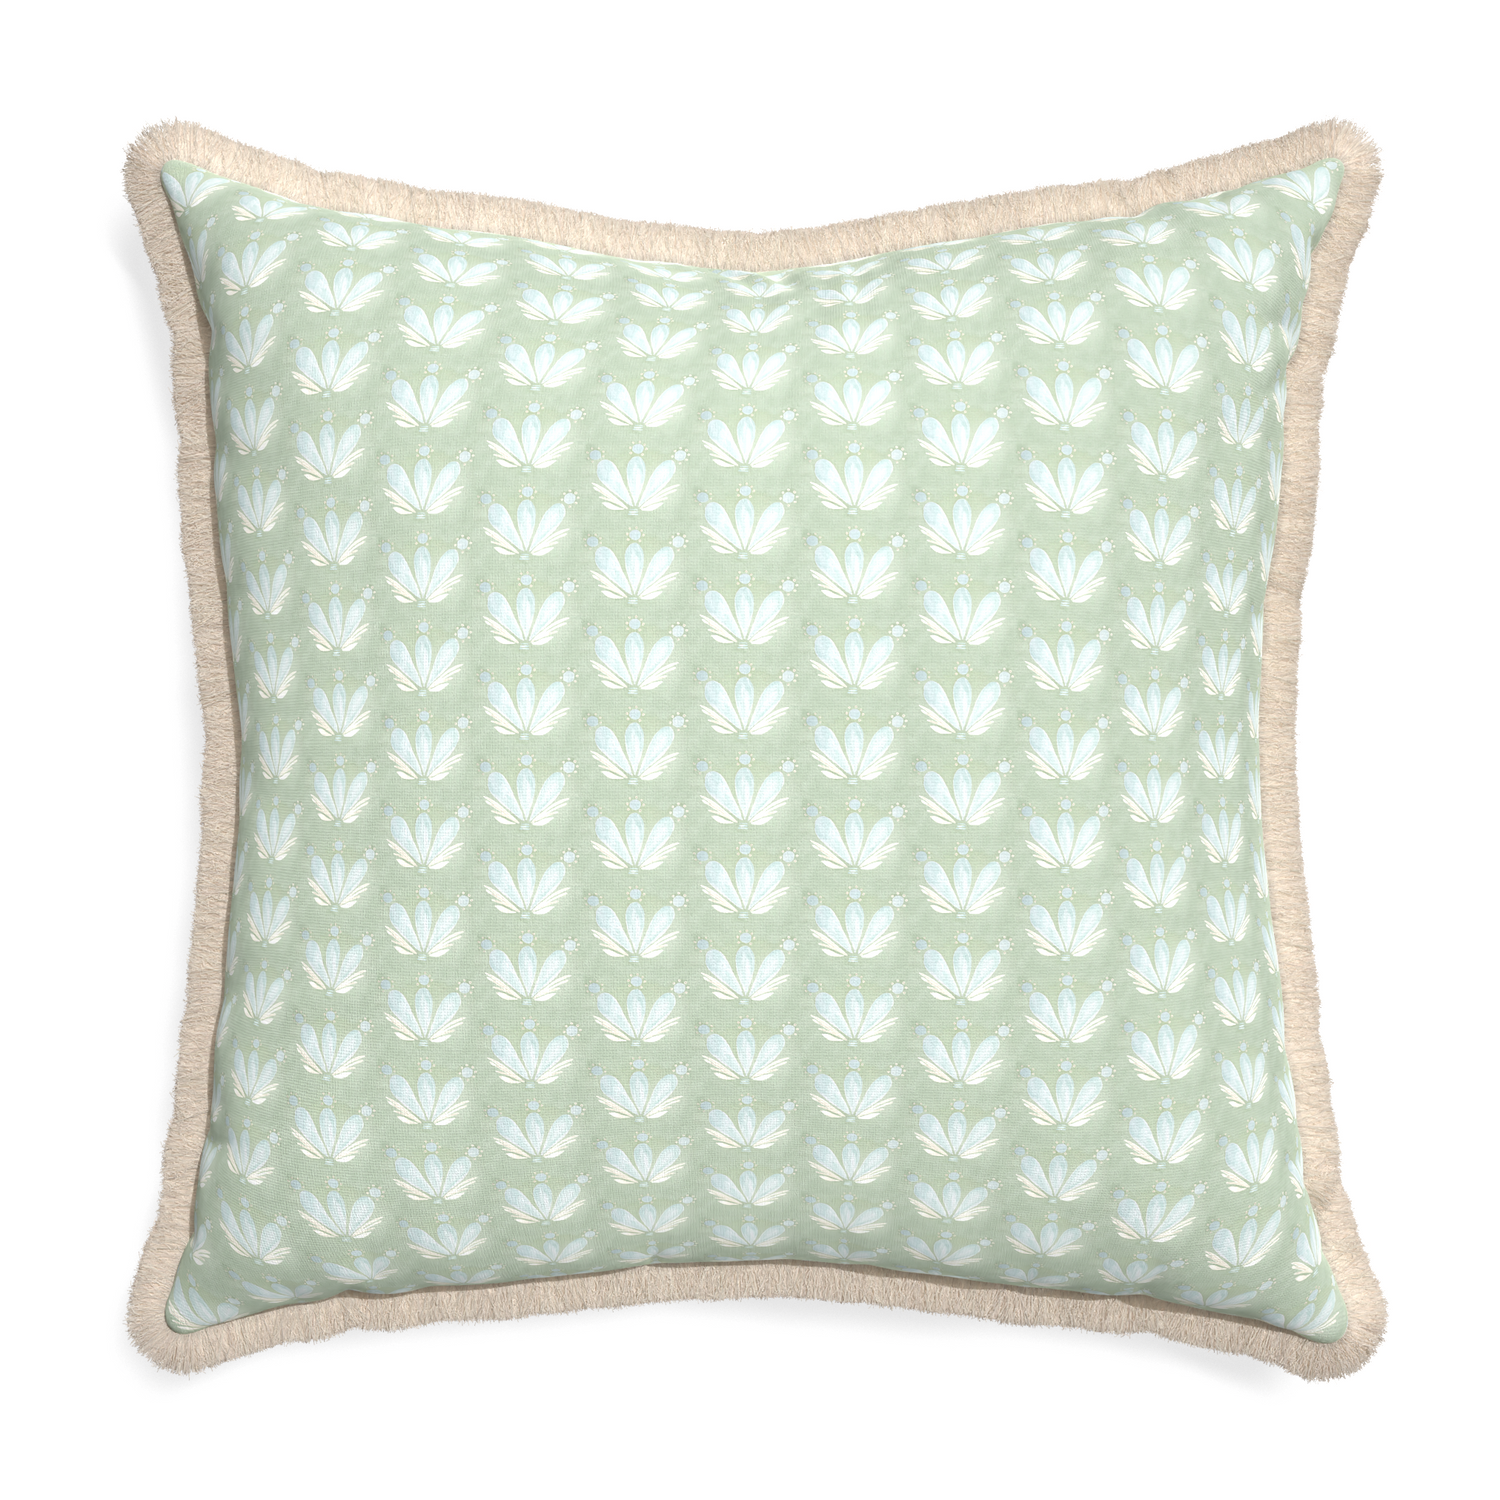 Euro-sham serena sea salt custom pillow with cream fringe on white background